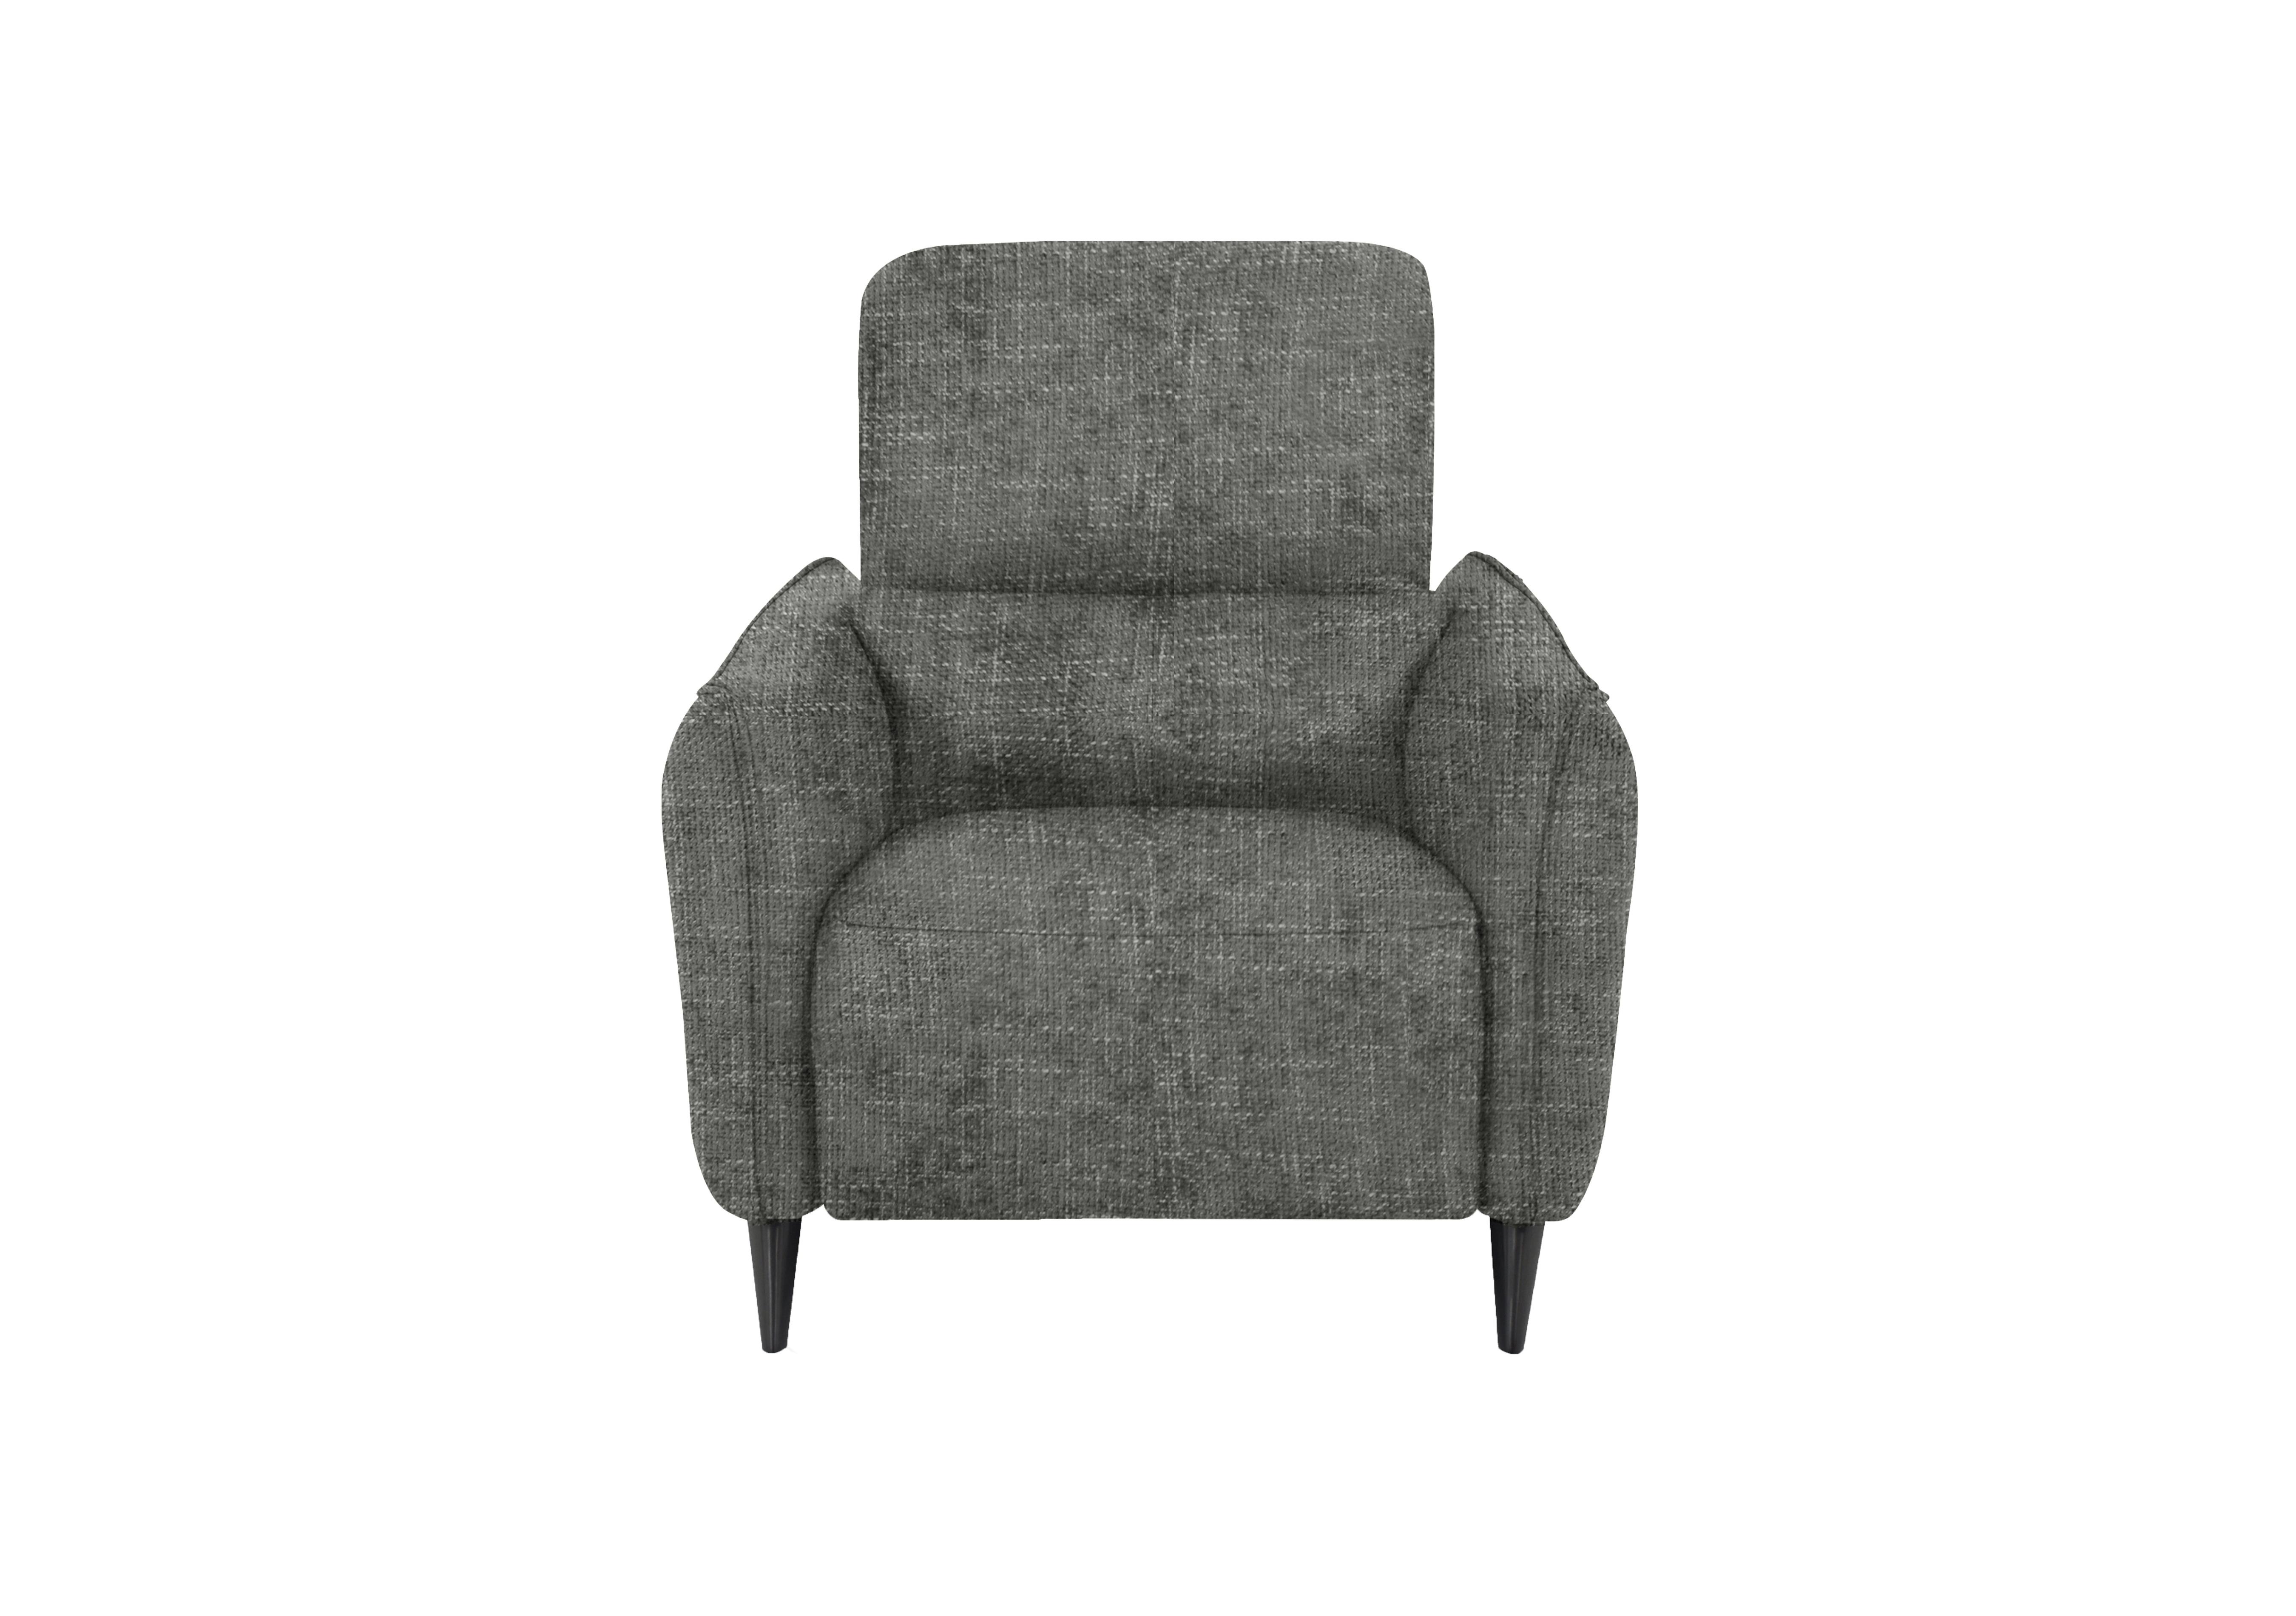 Maddox Fabric Chair in Fab-Cac-R455 Ash on Furniture Village